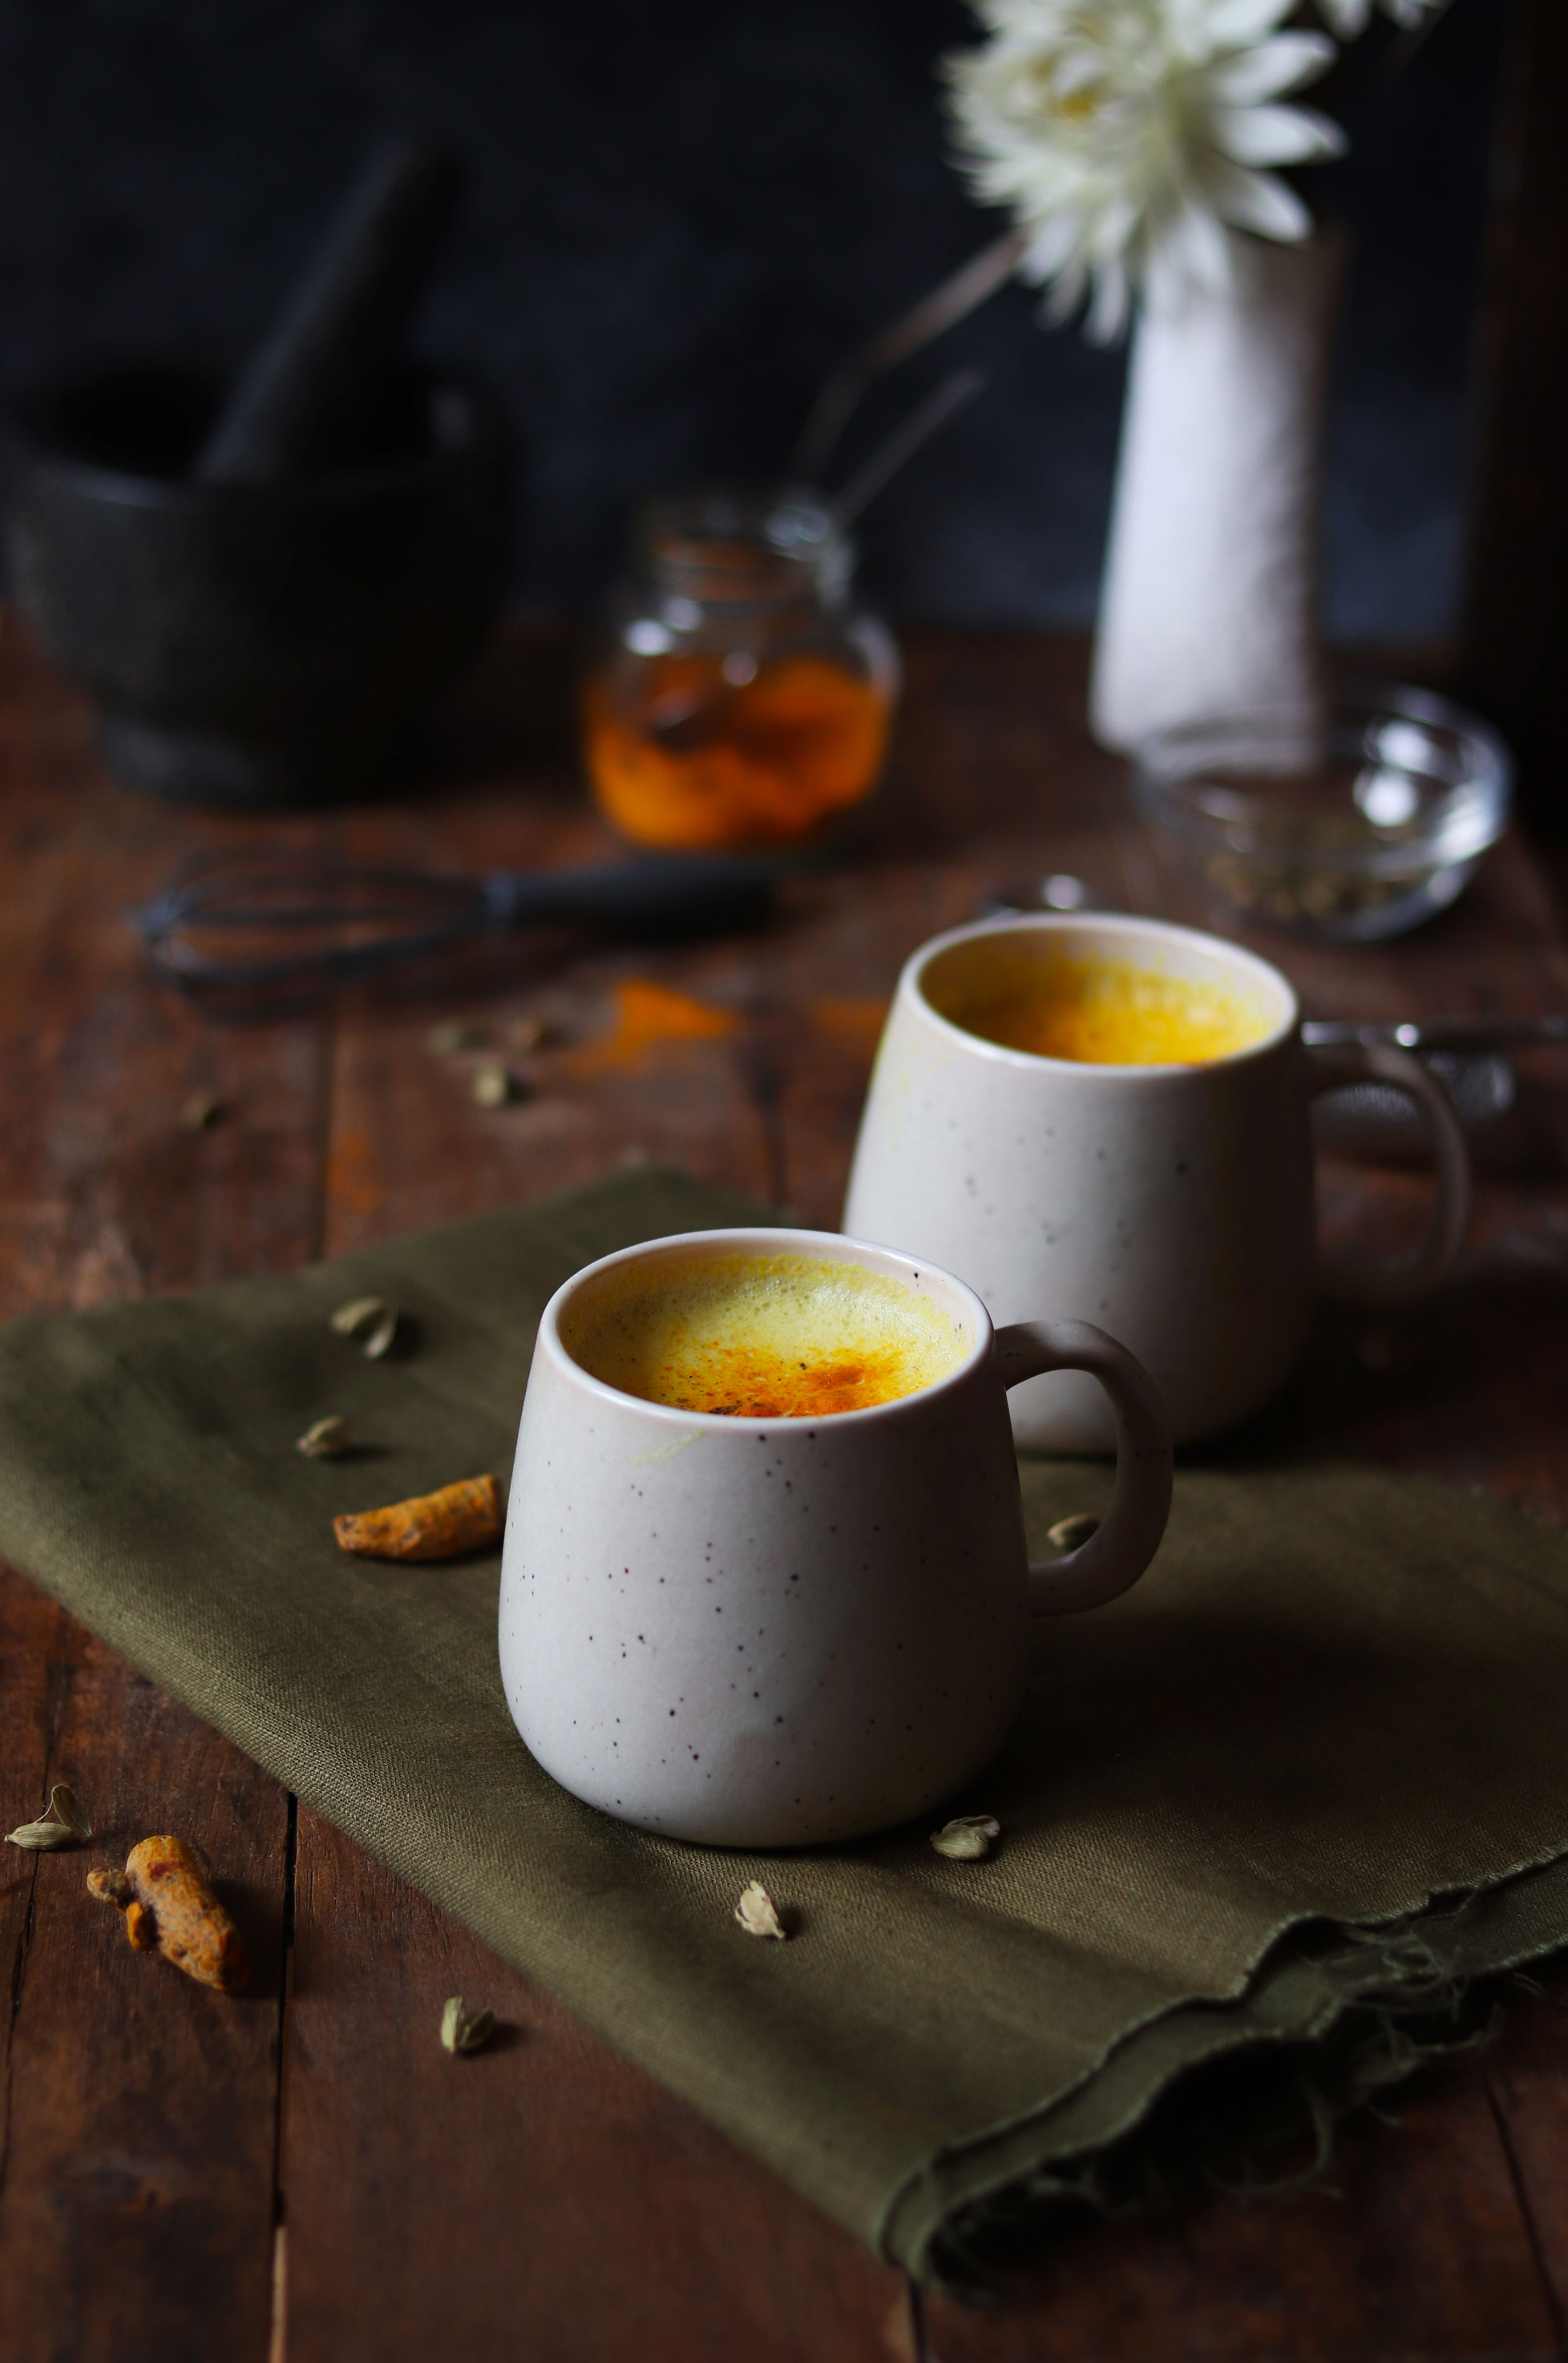 Turmeric and cardamom latte